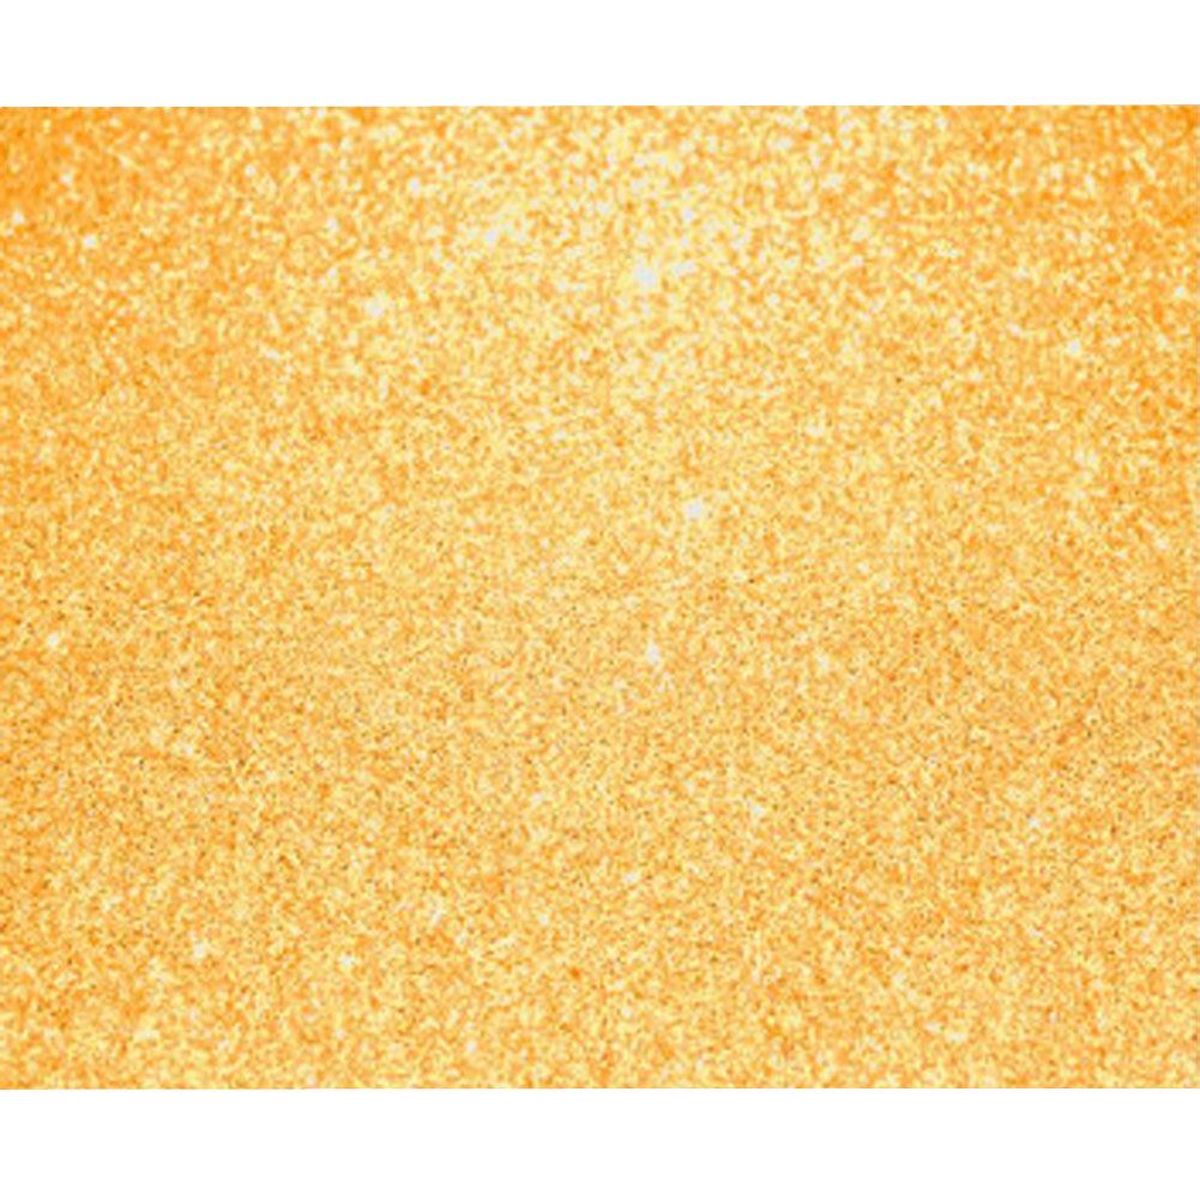 Glitter adhesive roll 45 x 150 cm - Gold